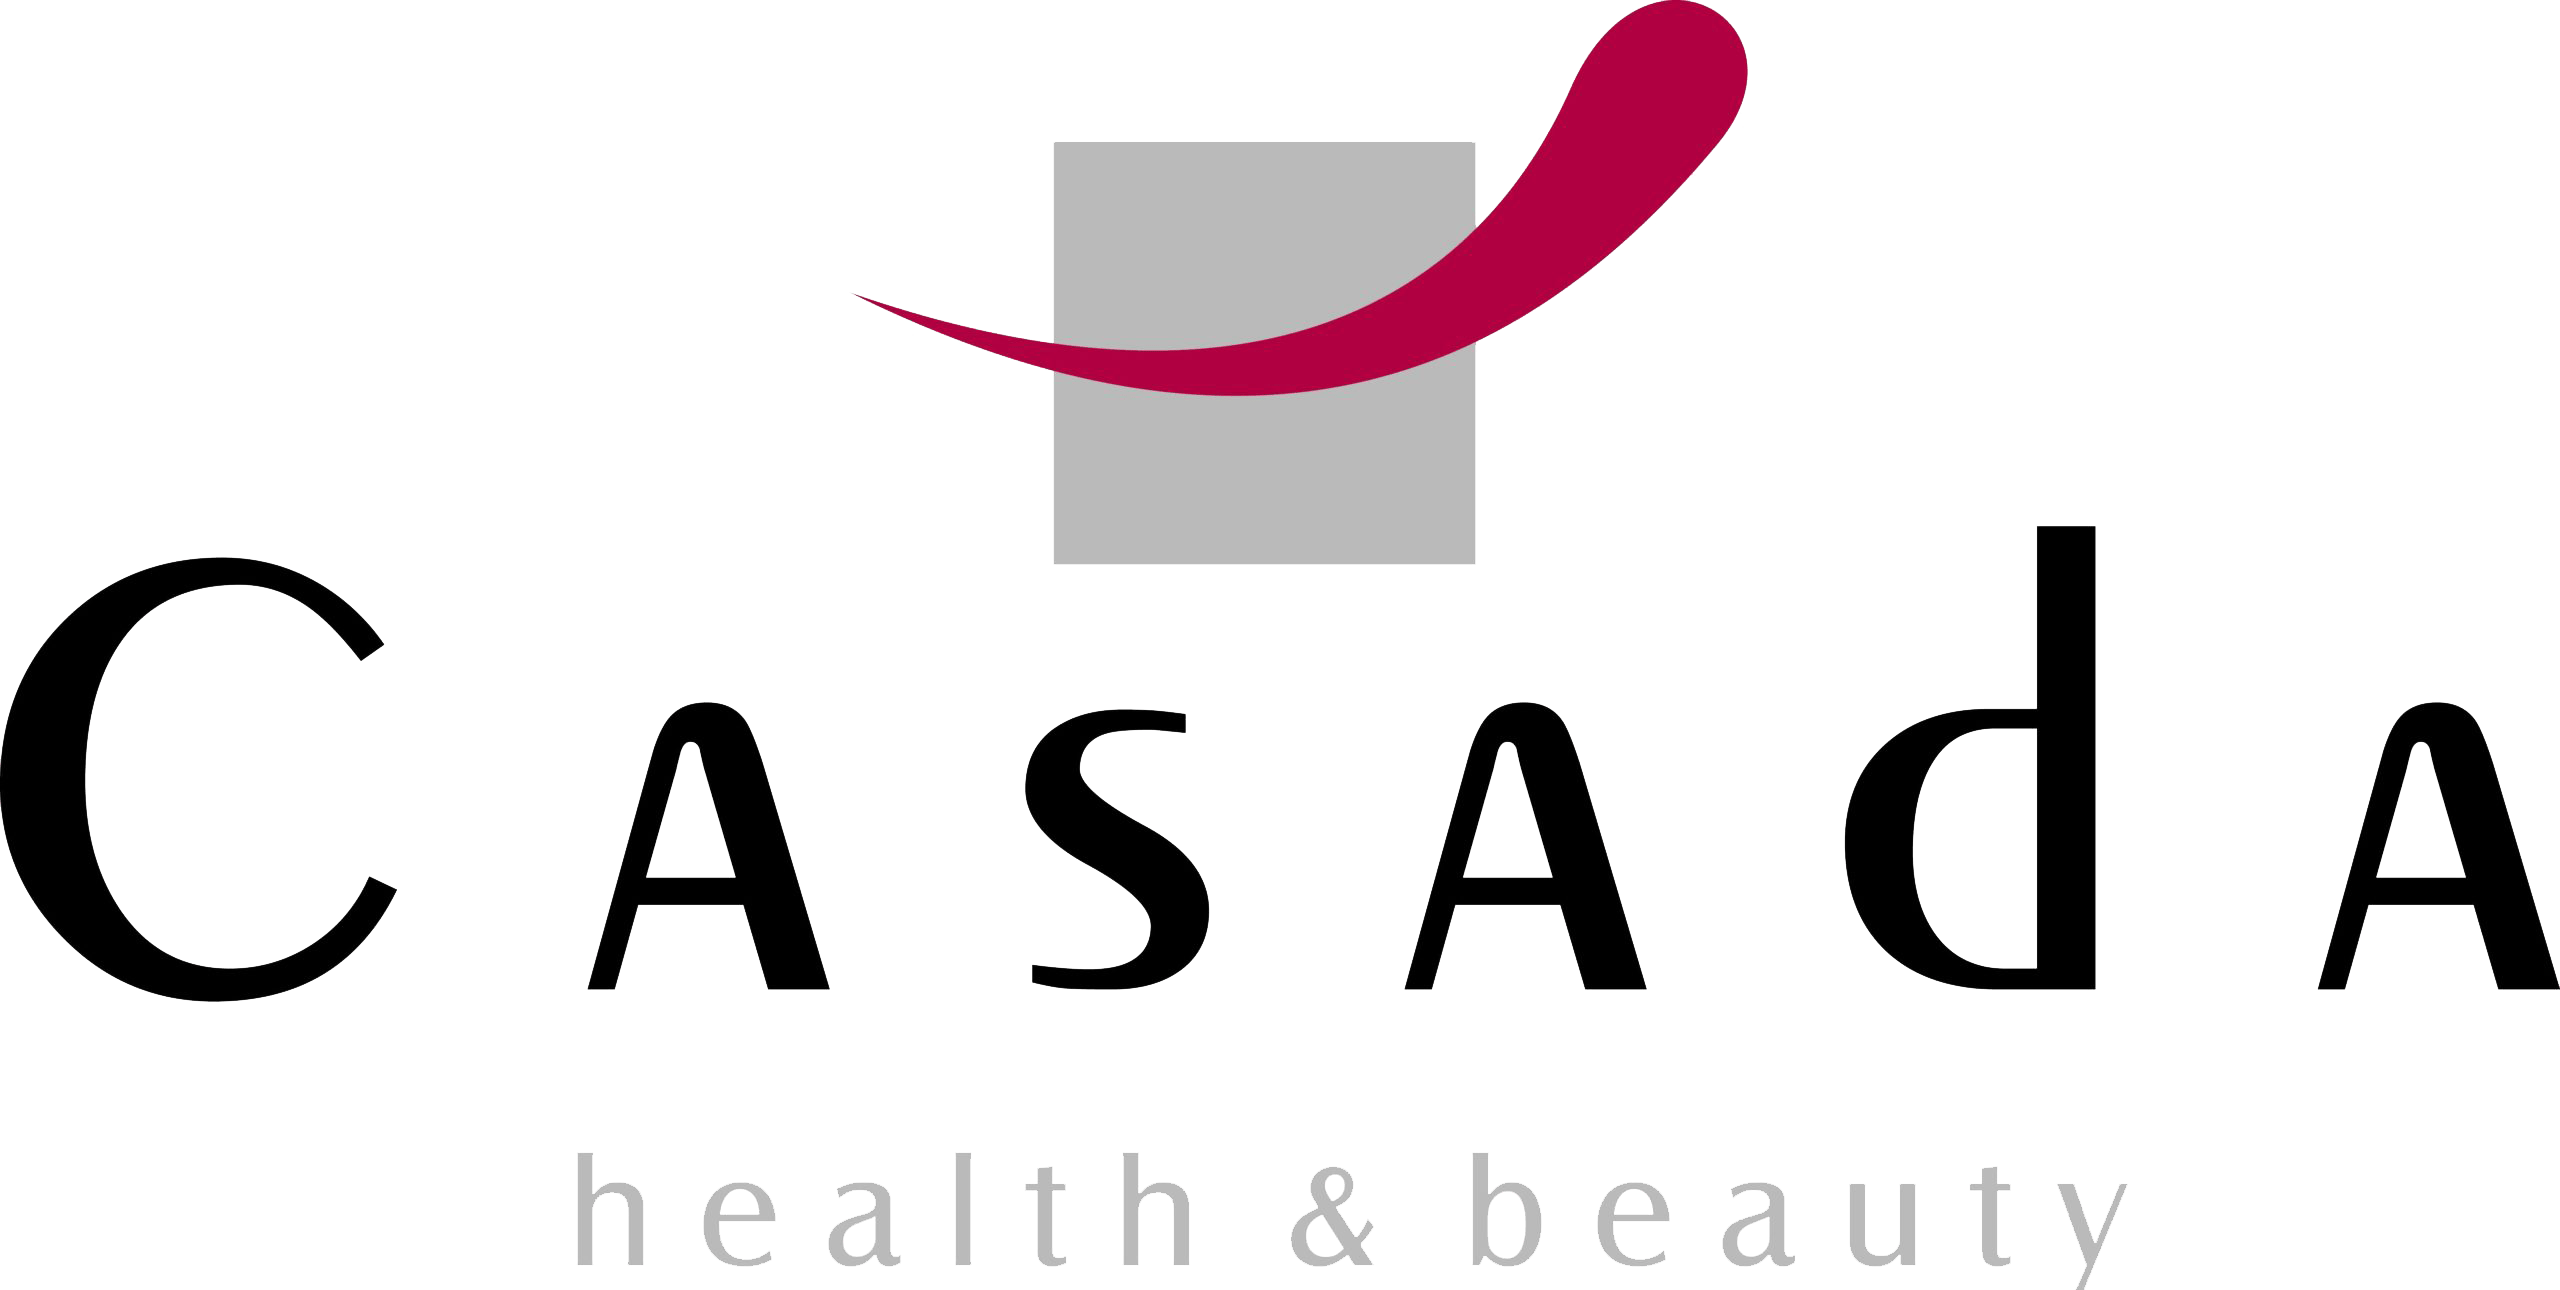 Casada Health & Beauty